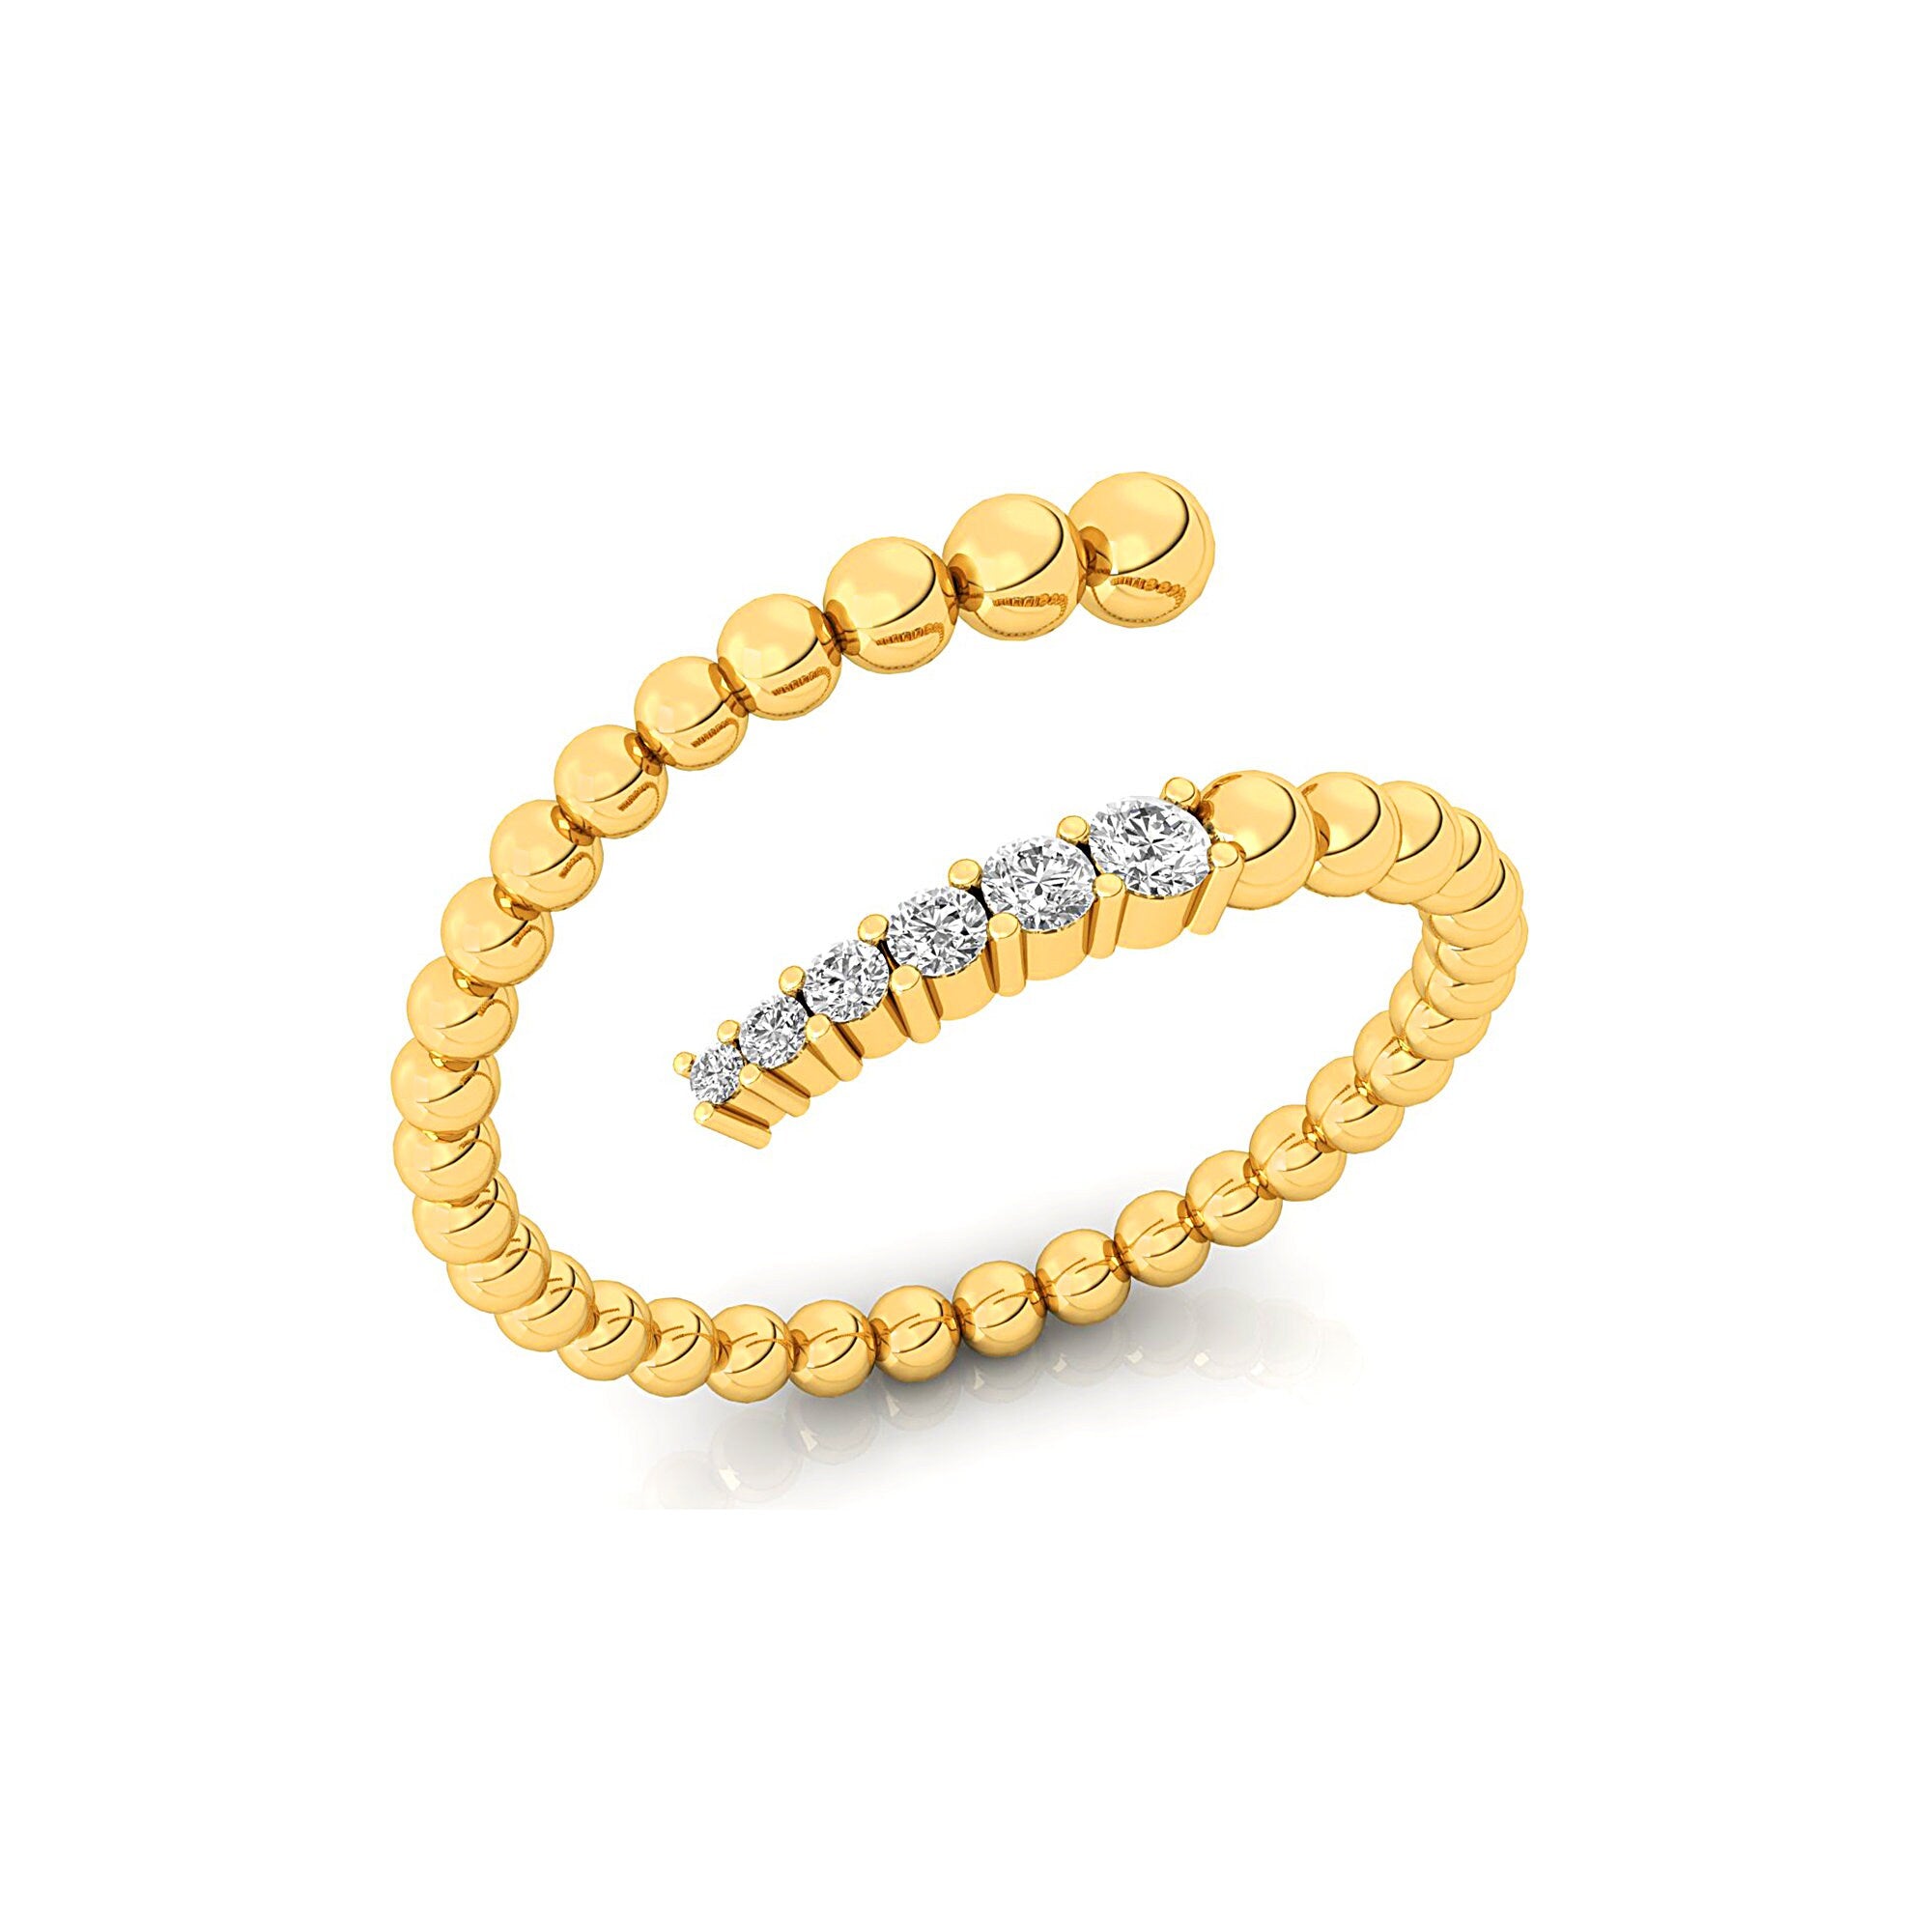 Diamond Spiral Ring, 14k Solid Gold Ring, Gift For Mom, Promise Ring, Wedding Gift, Gift for Her